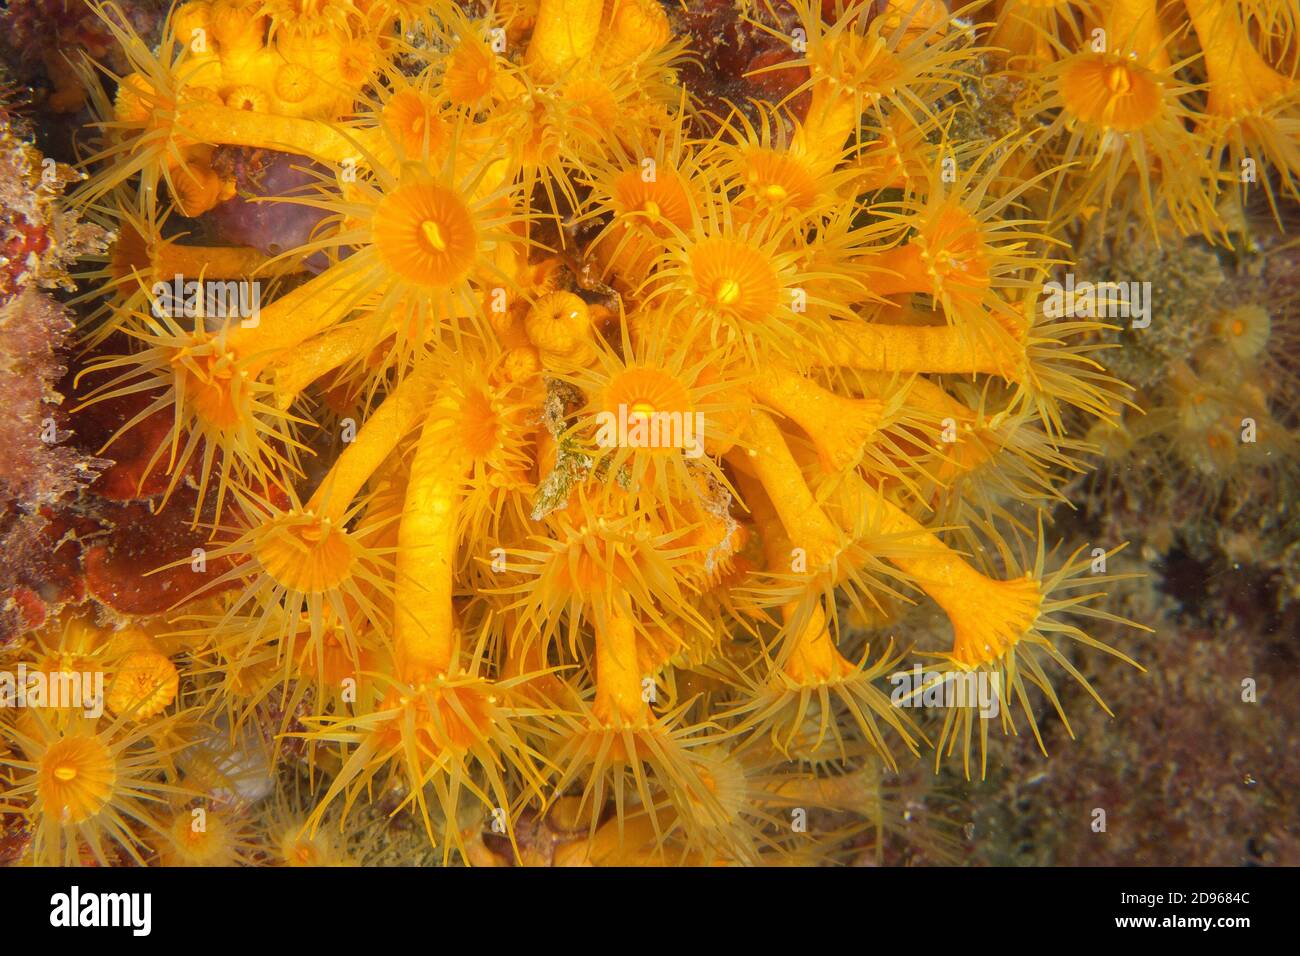 Gelbes Meer Anemone, Parazoanthus axinellae, Cabo Cope Naturpark Puntas del Canegre, Mittelmeer, Murcia, Spanien, Europa. Stockfoto